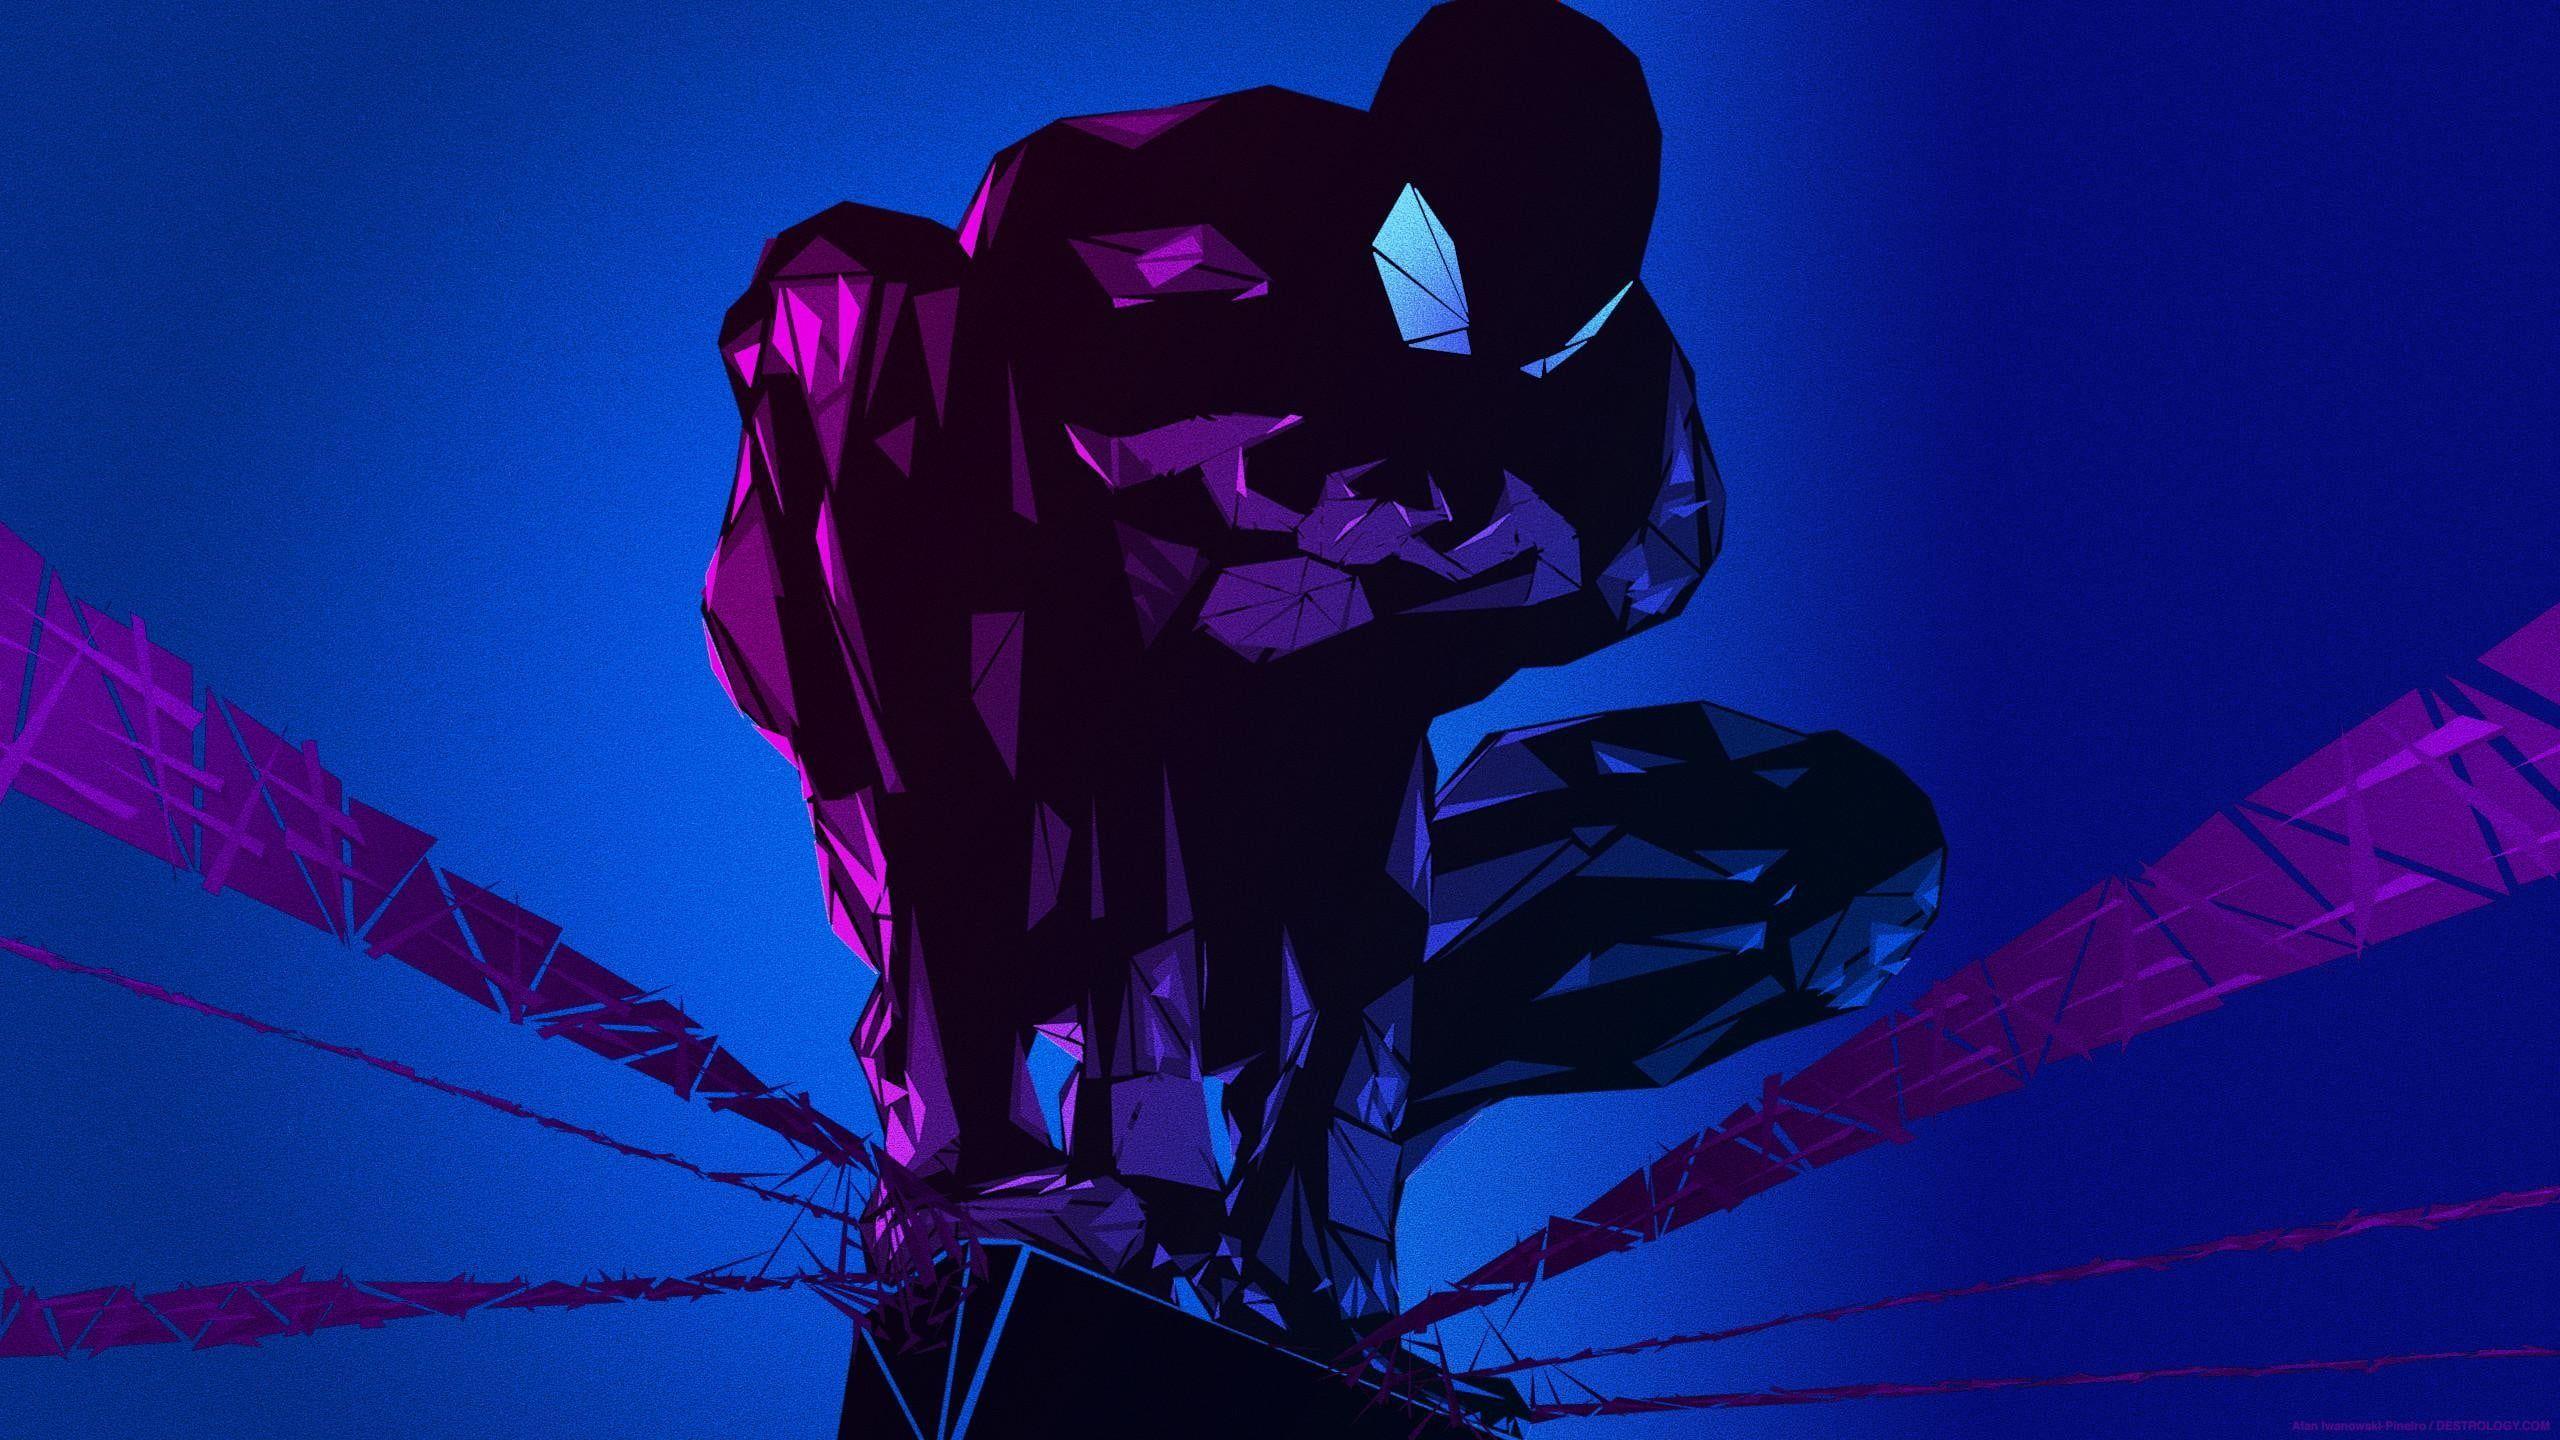 Black Spider-Man 4K Wallpapers - Top Free Black Spider-Man 4K